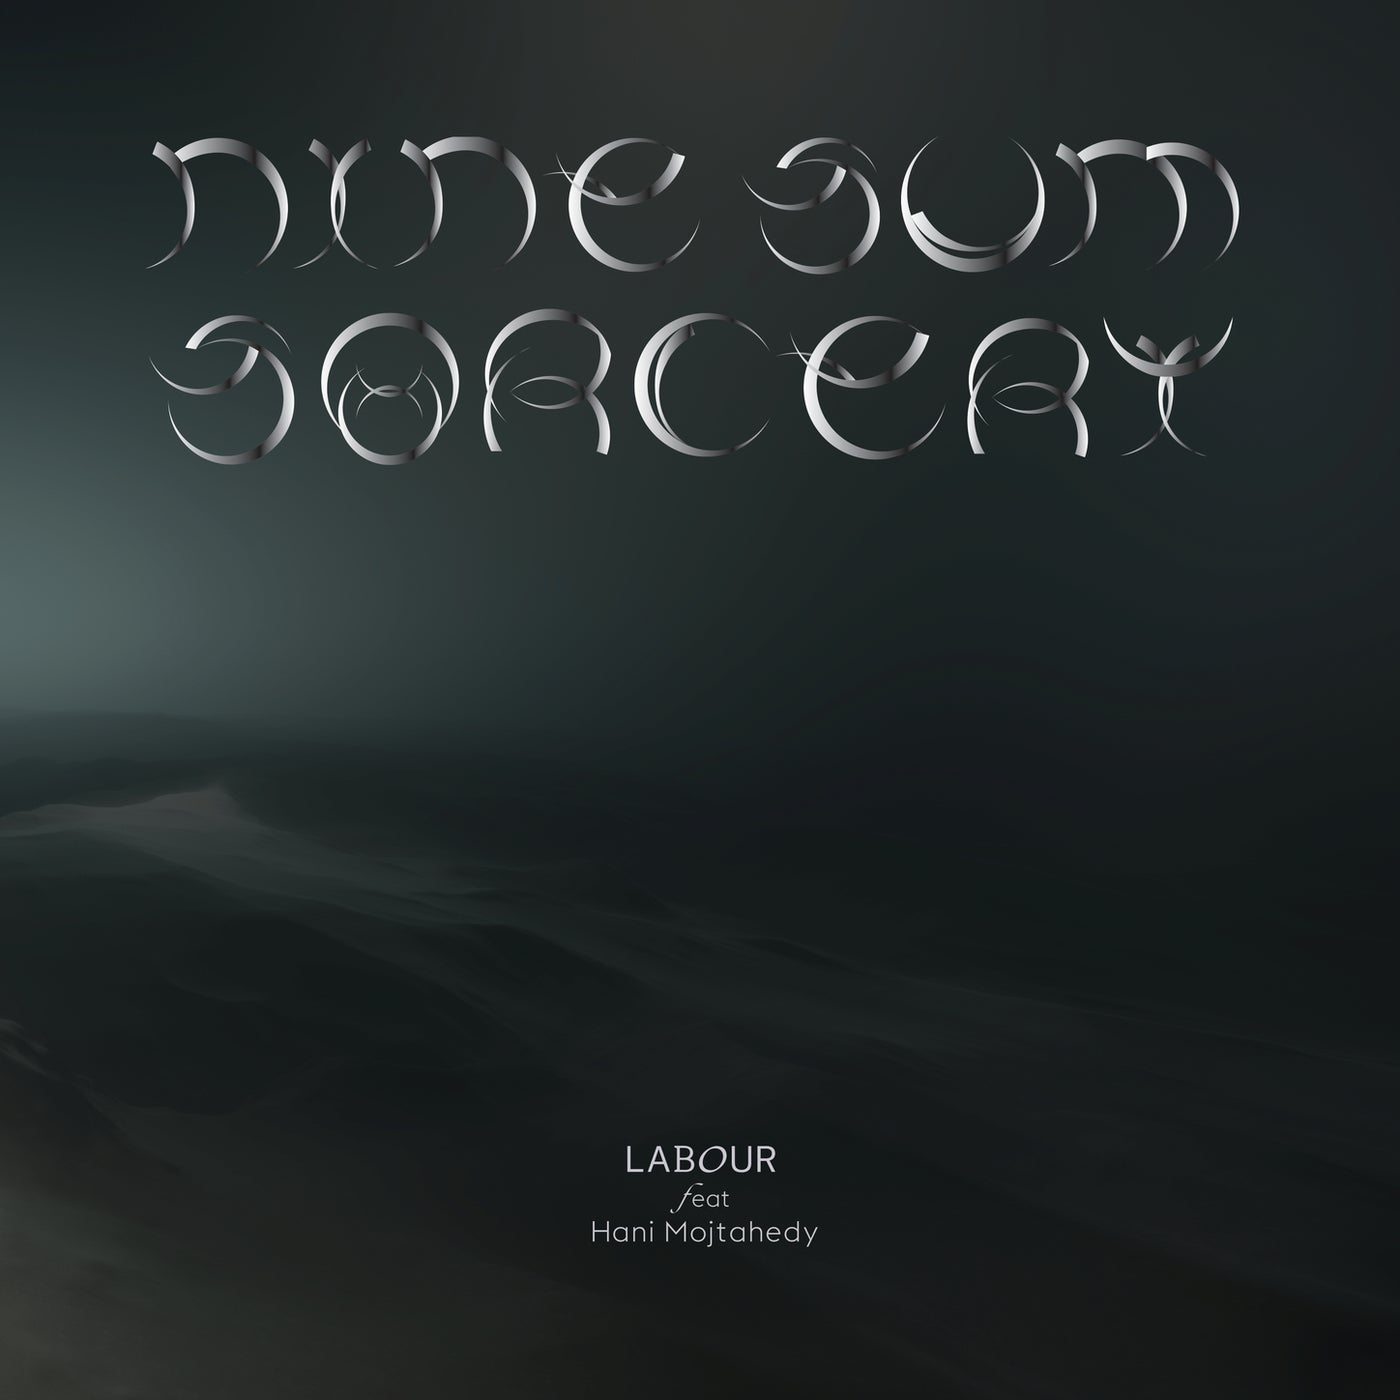 nine-sum sorcery feat. Hani Mojtahedy